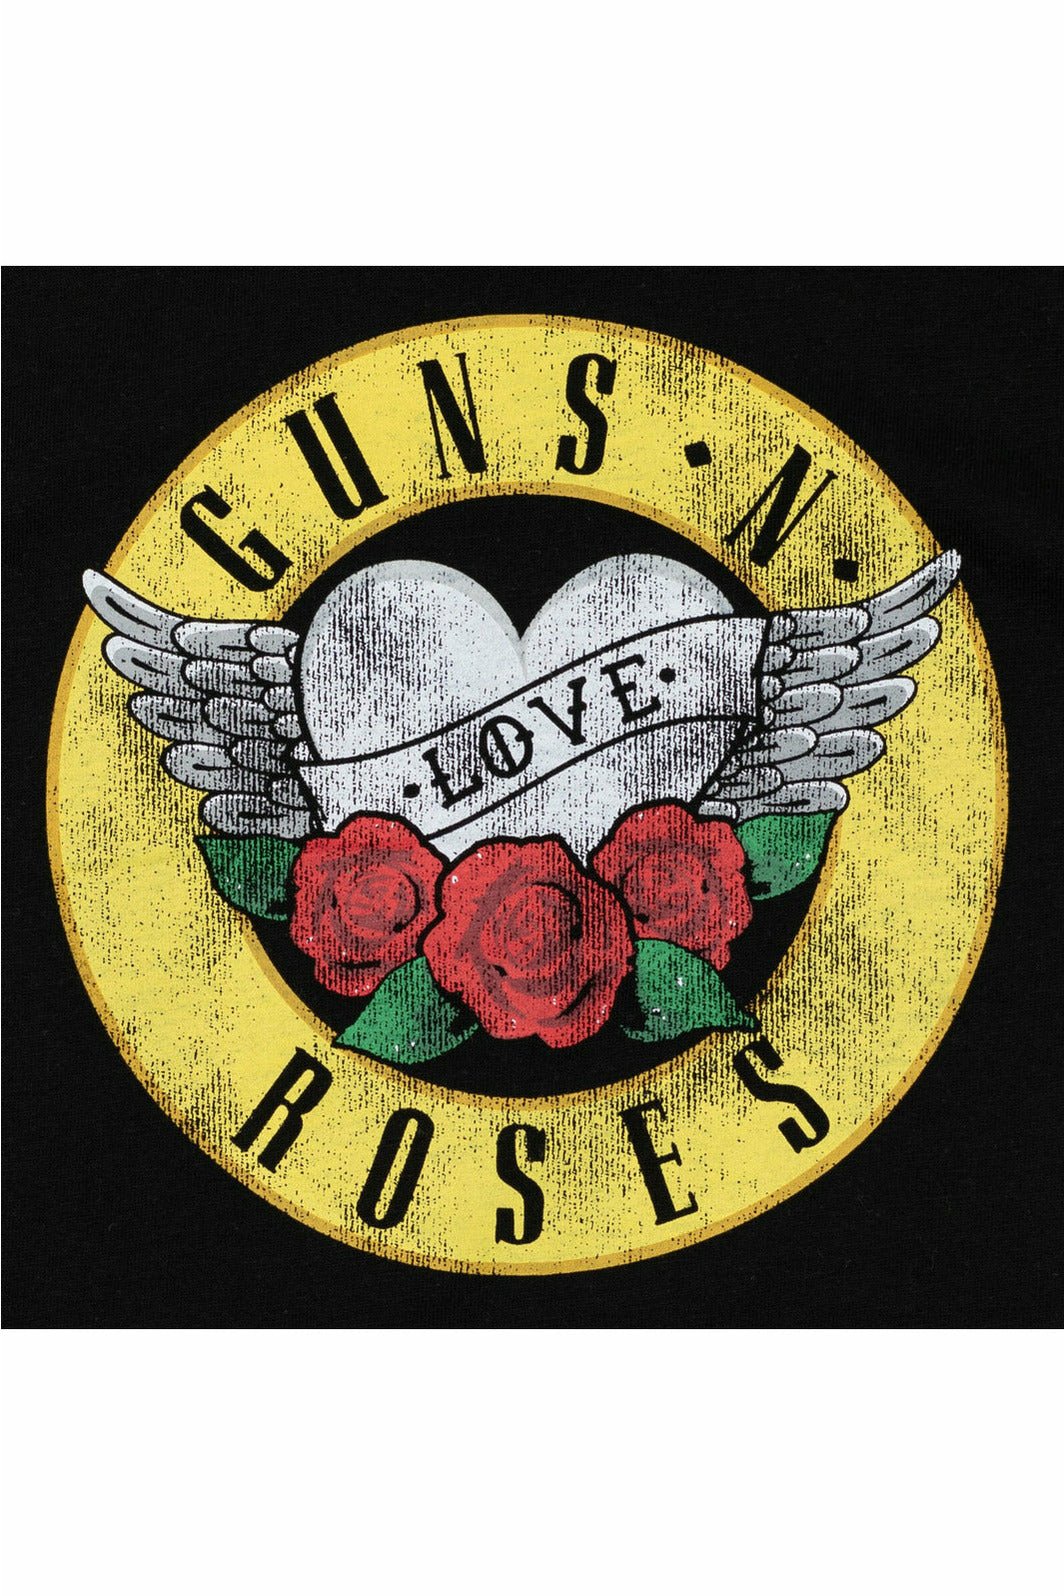 Guns N' Roses Guns N Roses 3 Pack Raglan Pullover Graphic T-Shirts - imagikids